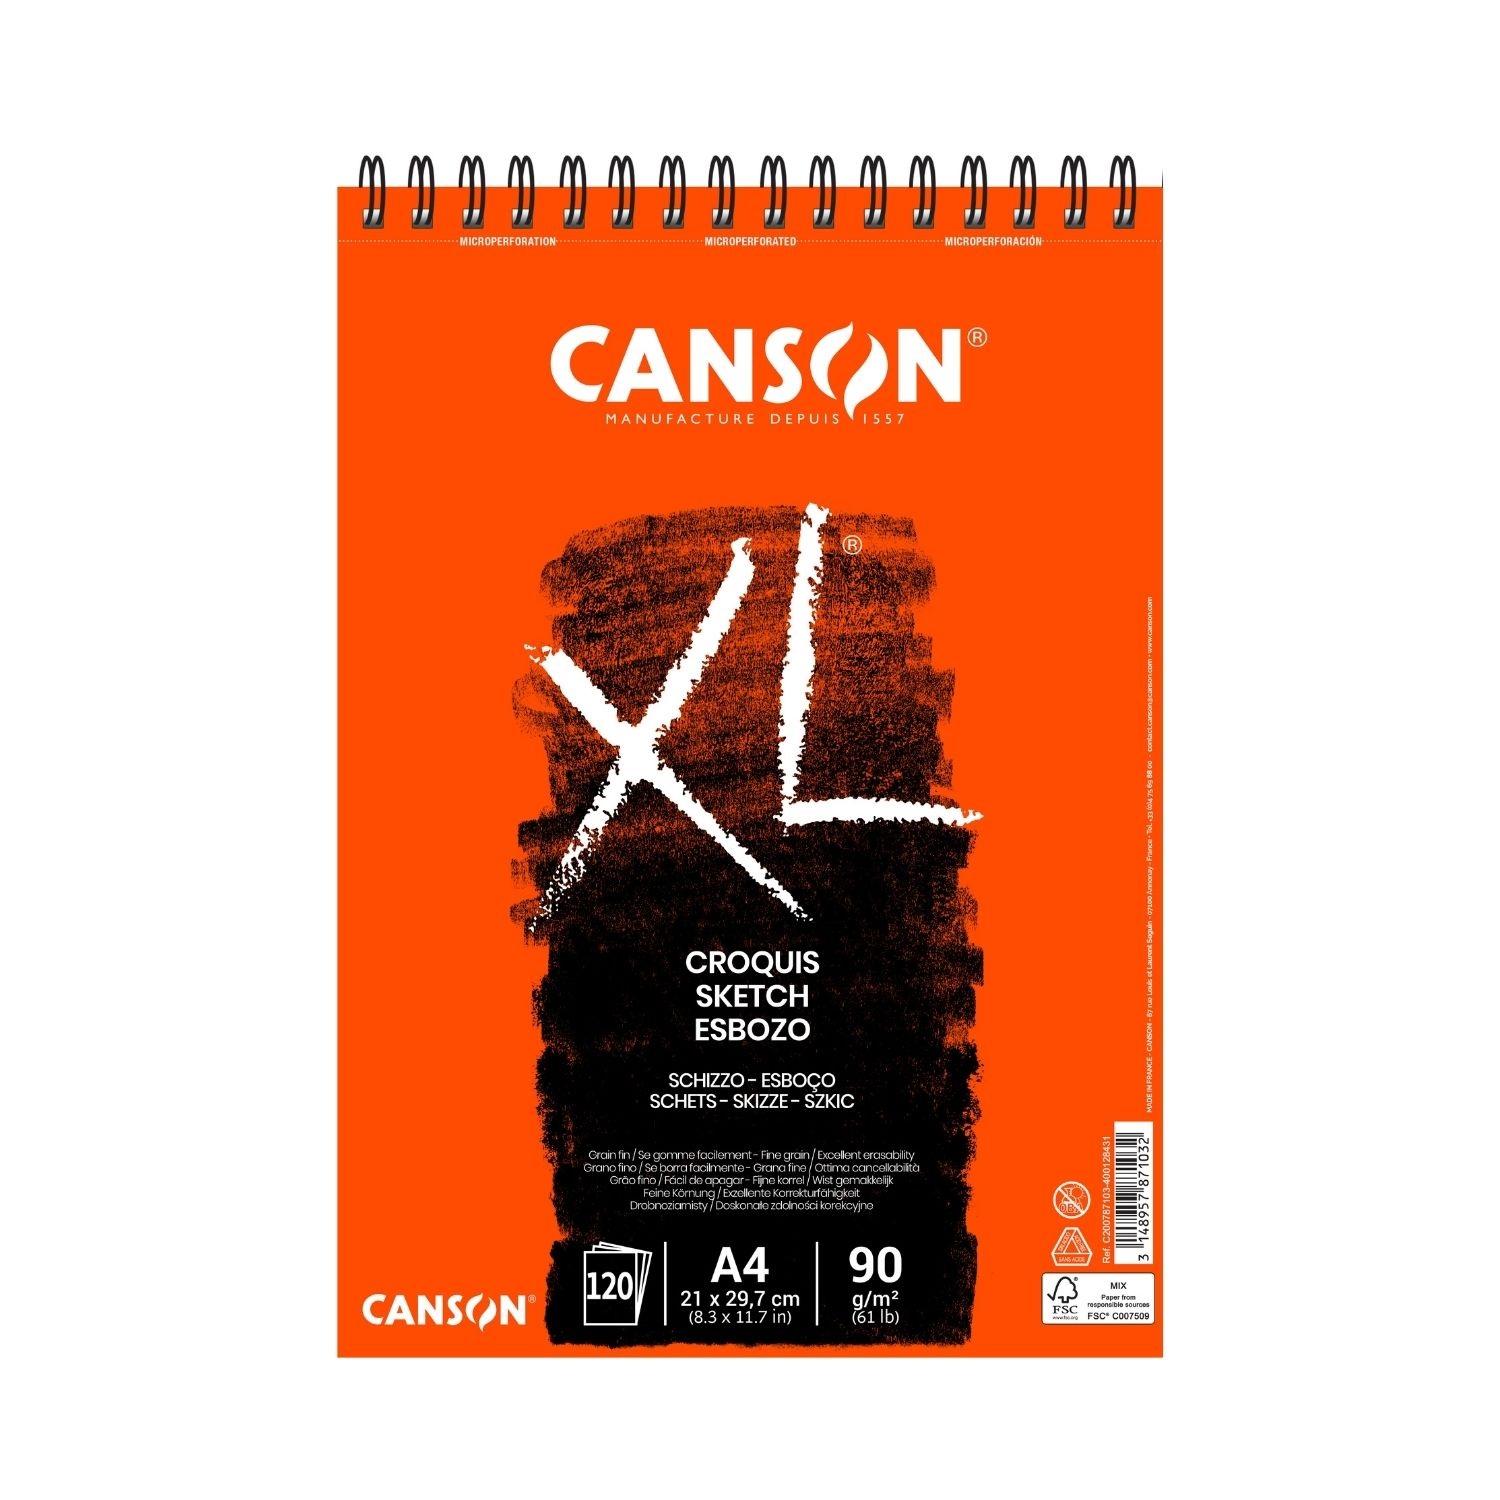 Carnet de dessin A6 Canson Notes